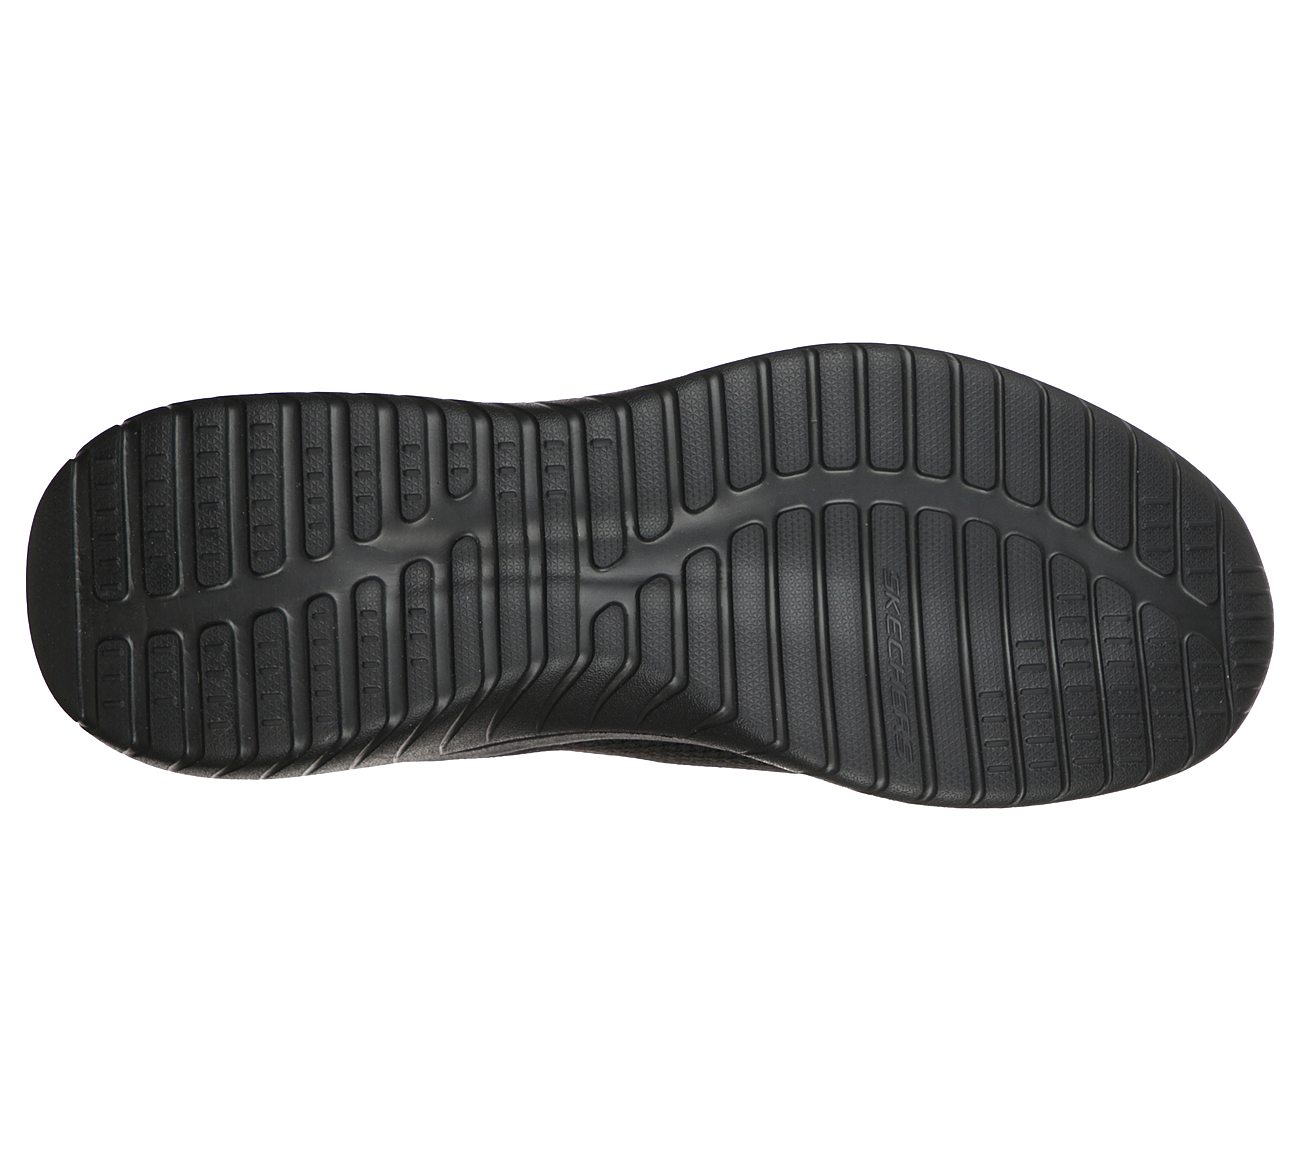 ULTRA FLEX 2.0 - KWASI, BBLACK Footwear Bottom View